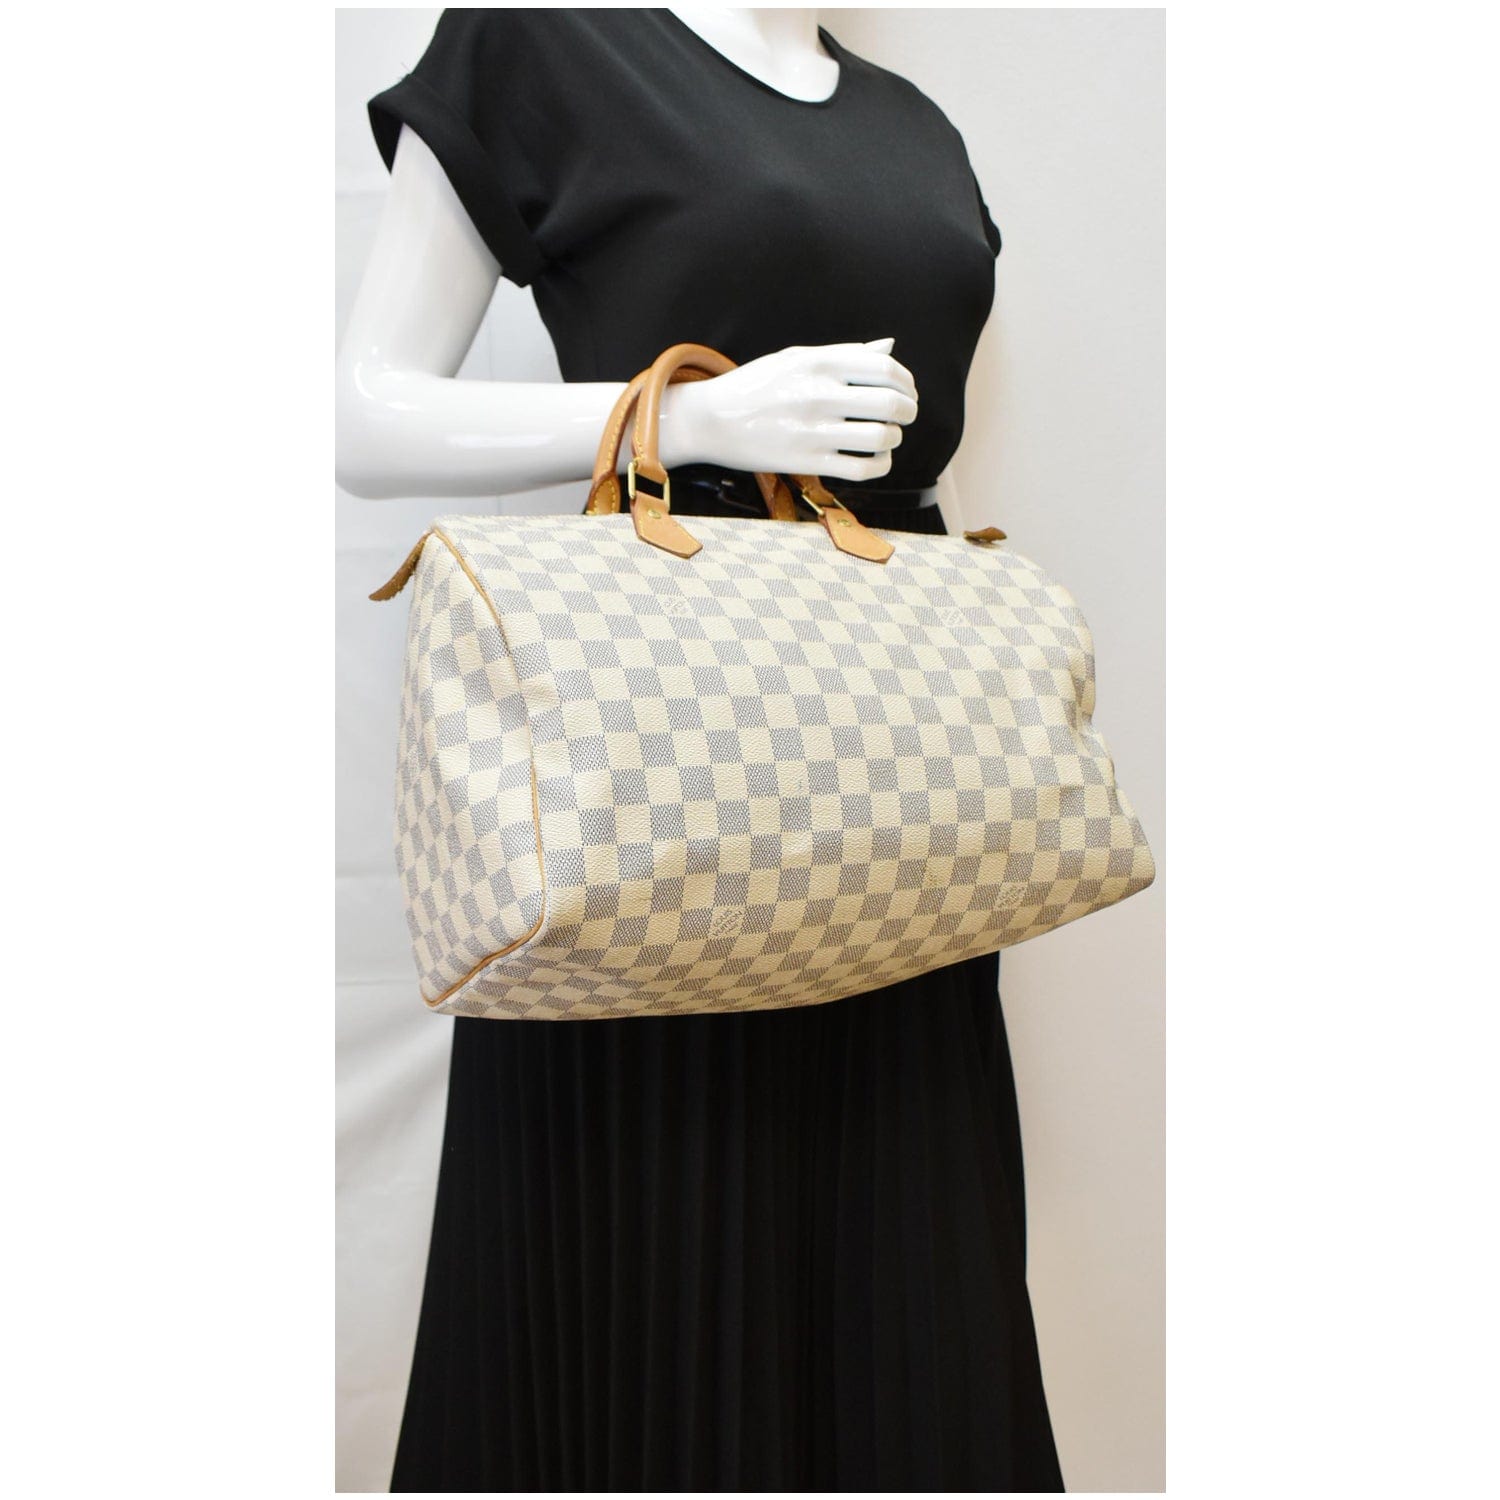 Louis Vuitton Speedy 35 Damier Azur Satchel Bag White